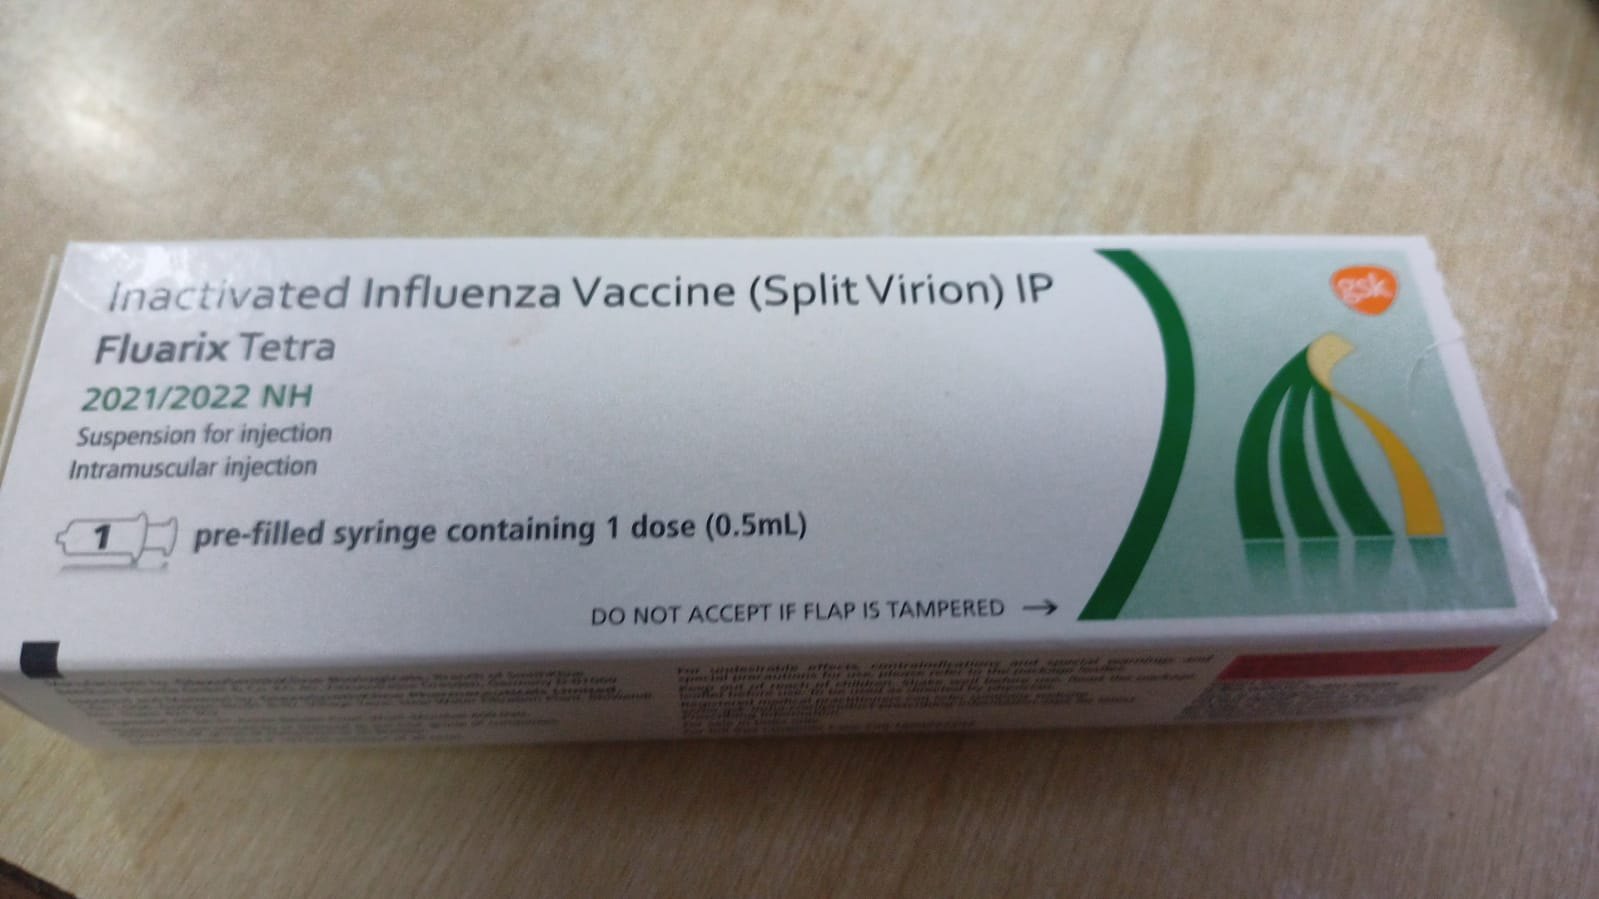 Inactivated Influenza Vaccine